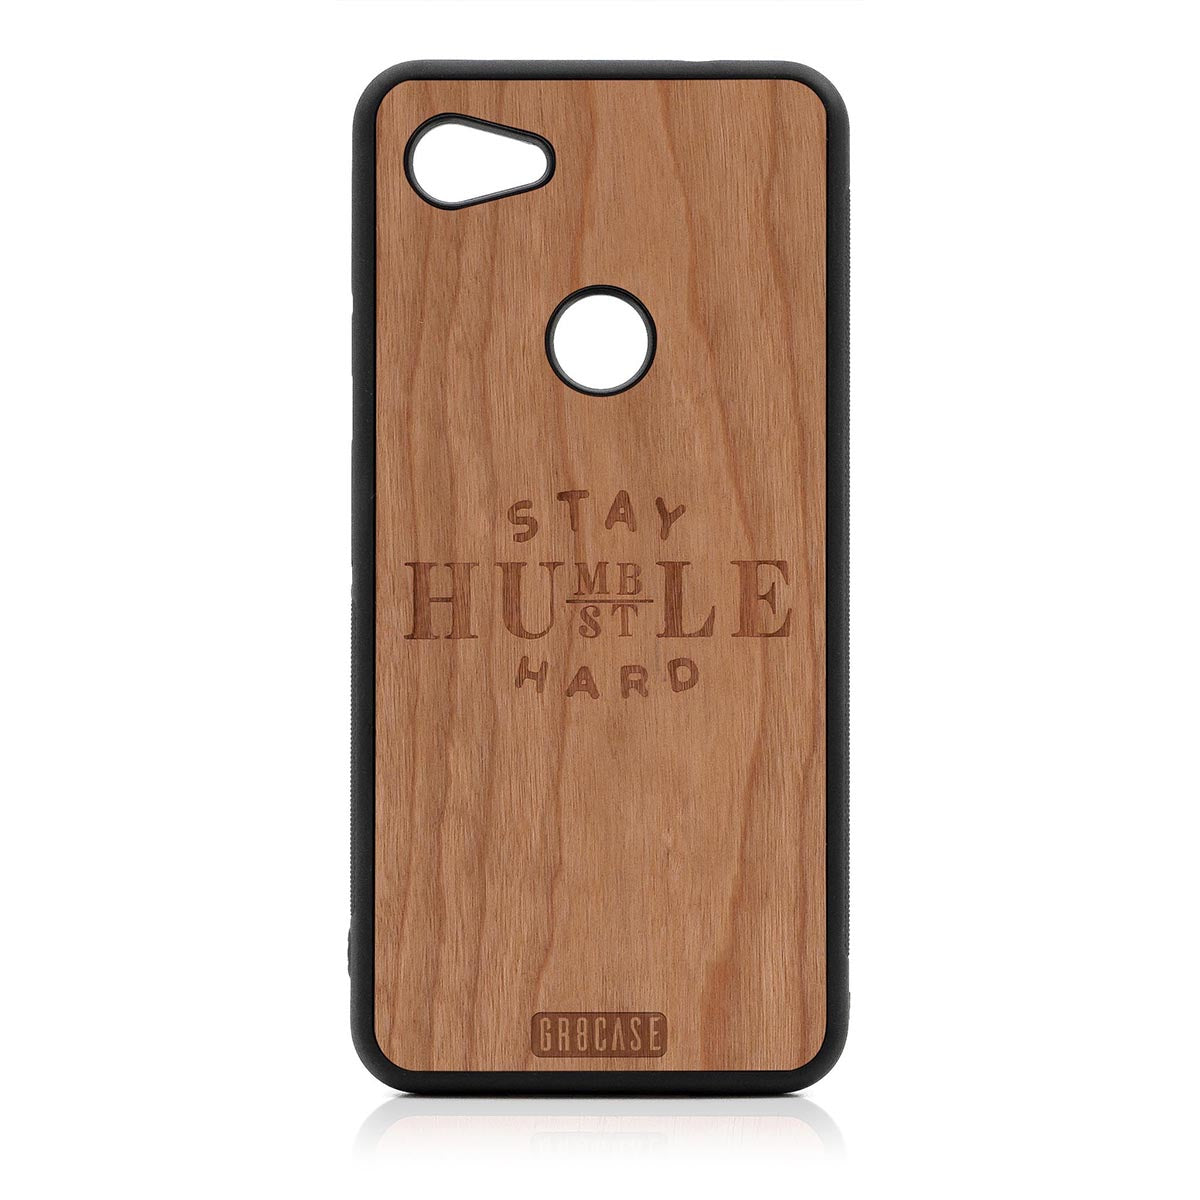 Stay Humble Hustle Hard Design Wood Case Google Pixel 3A by GR8CASE